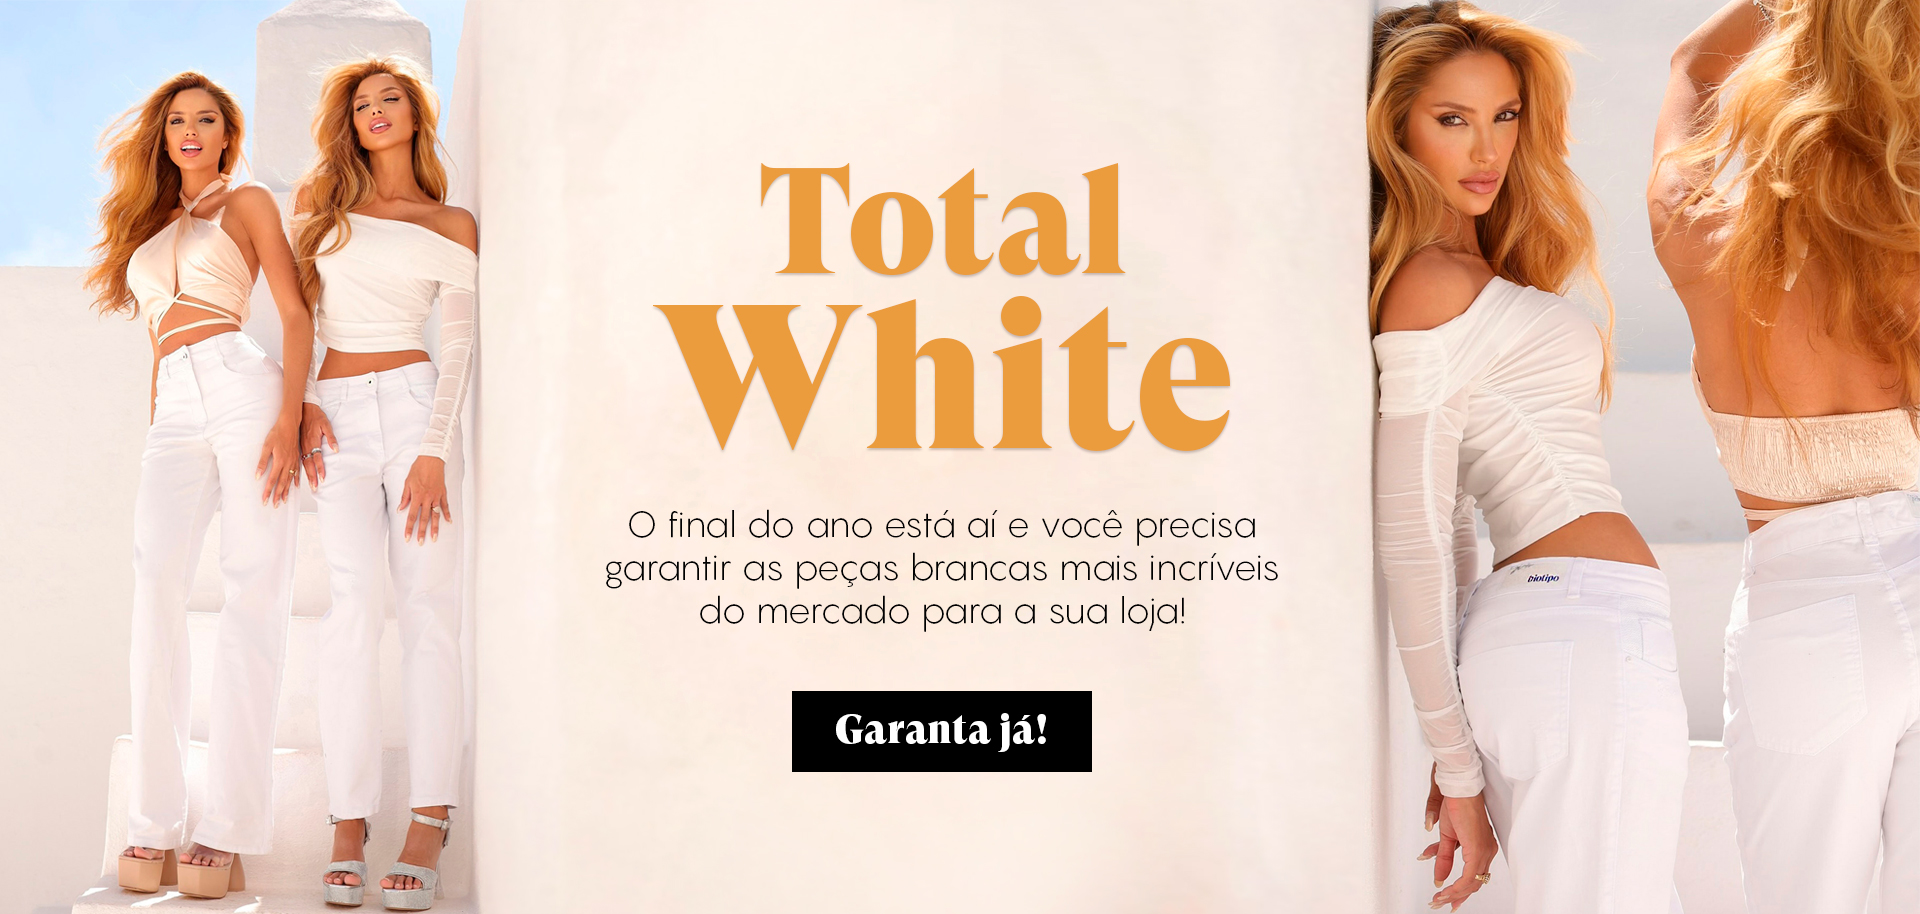 Total white